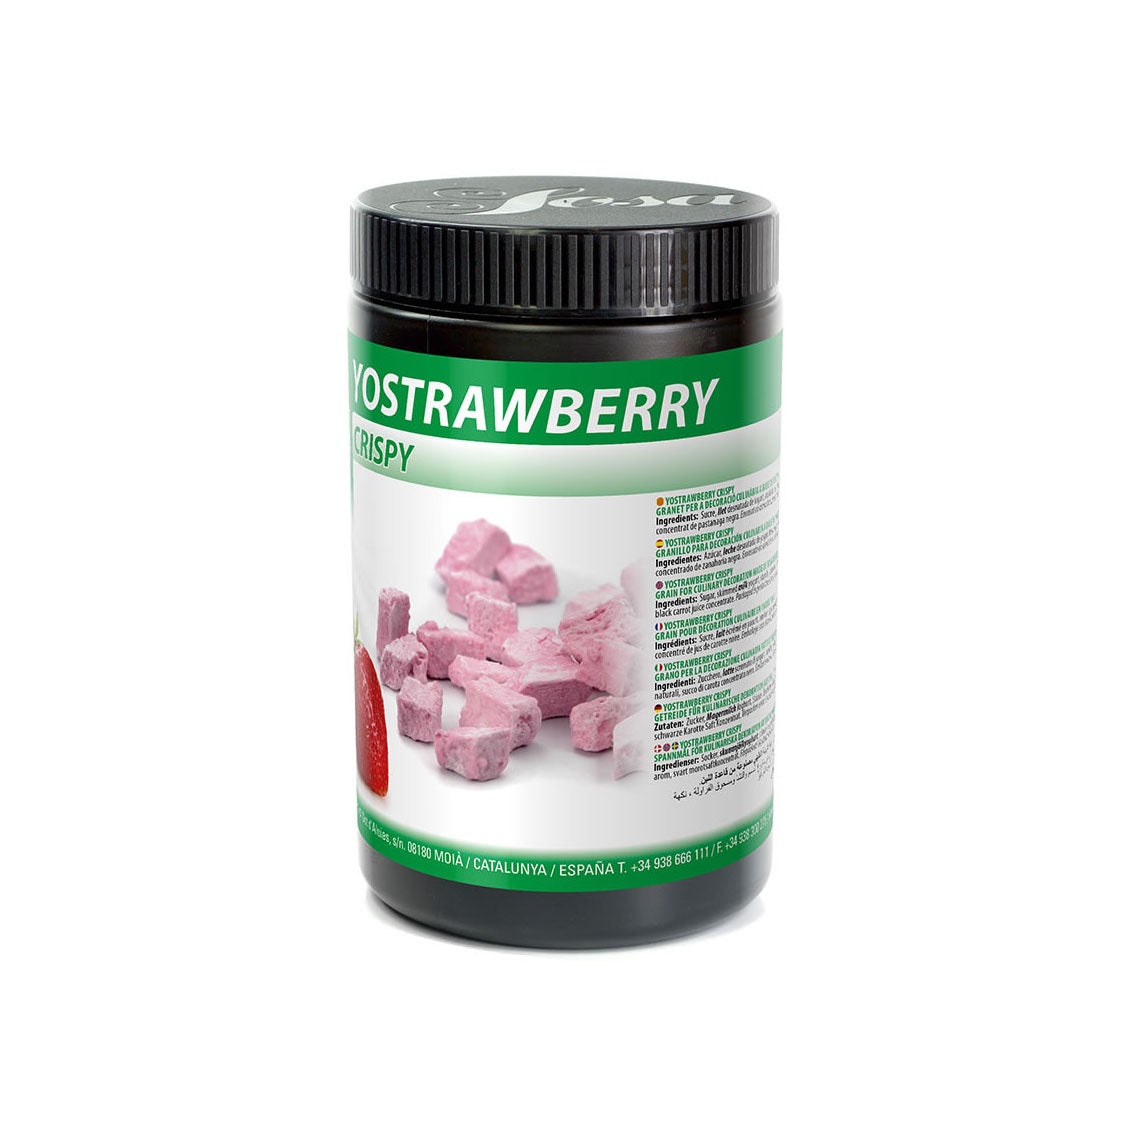 SOSA Freeze Dried Strawberry Yogurt Crispy, 150g